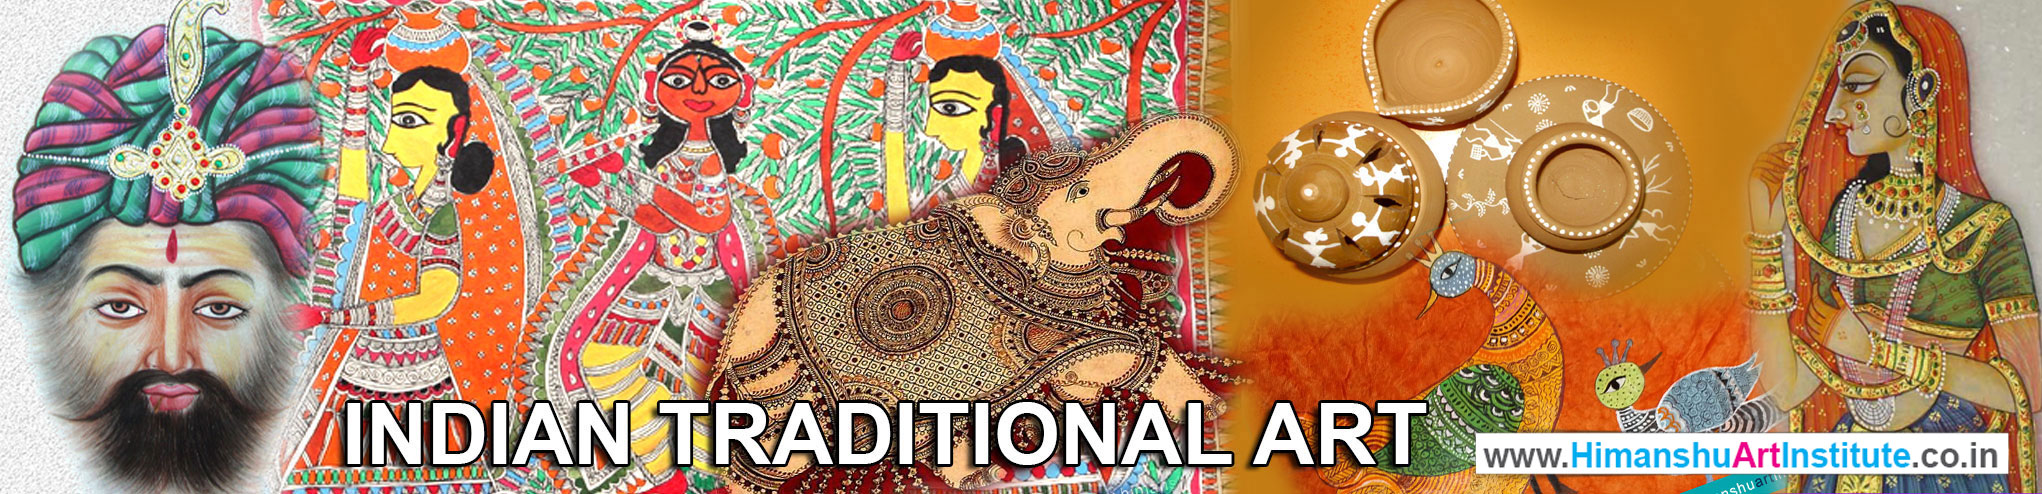 Indian Art, Indian Traditional Art, Indian Folk Art